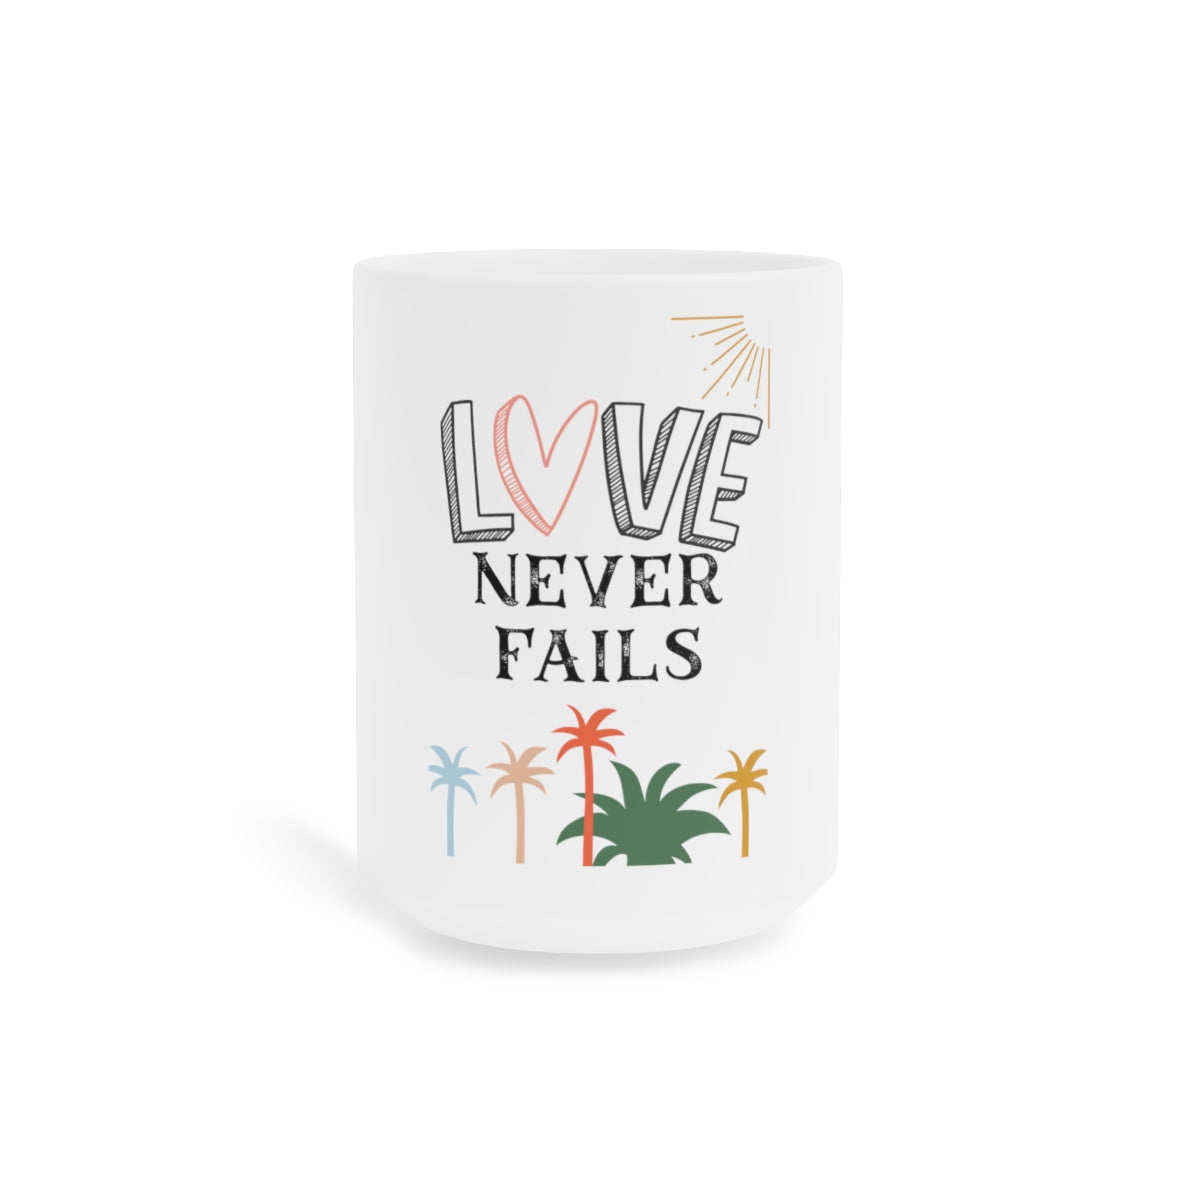 Love never fails mug